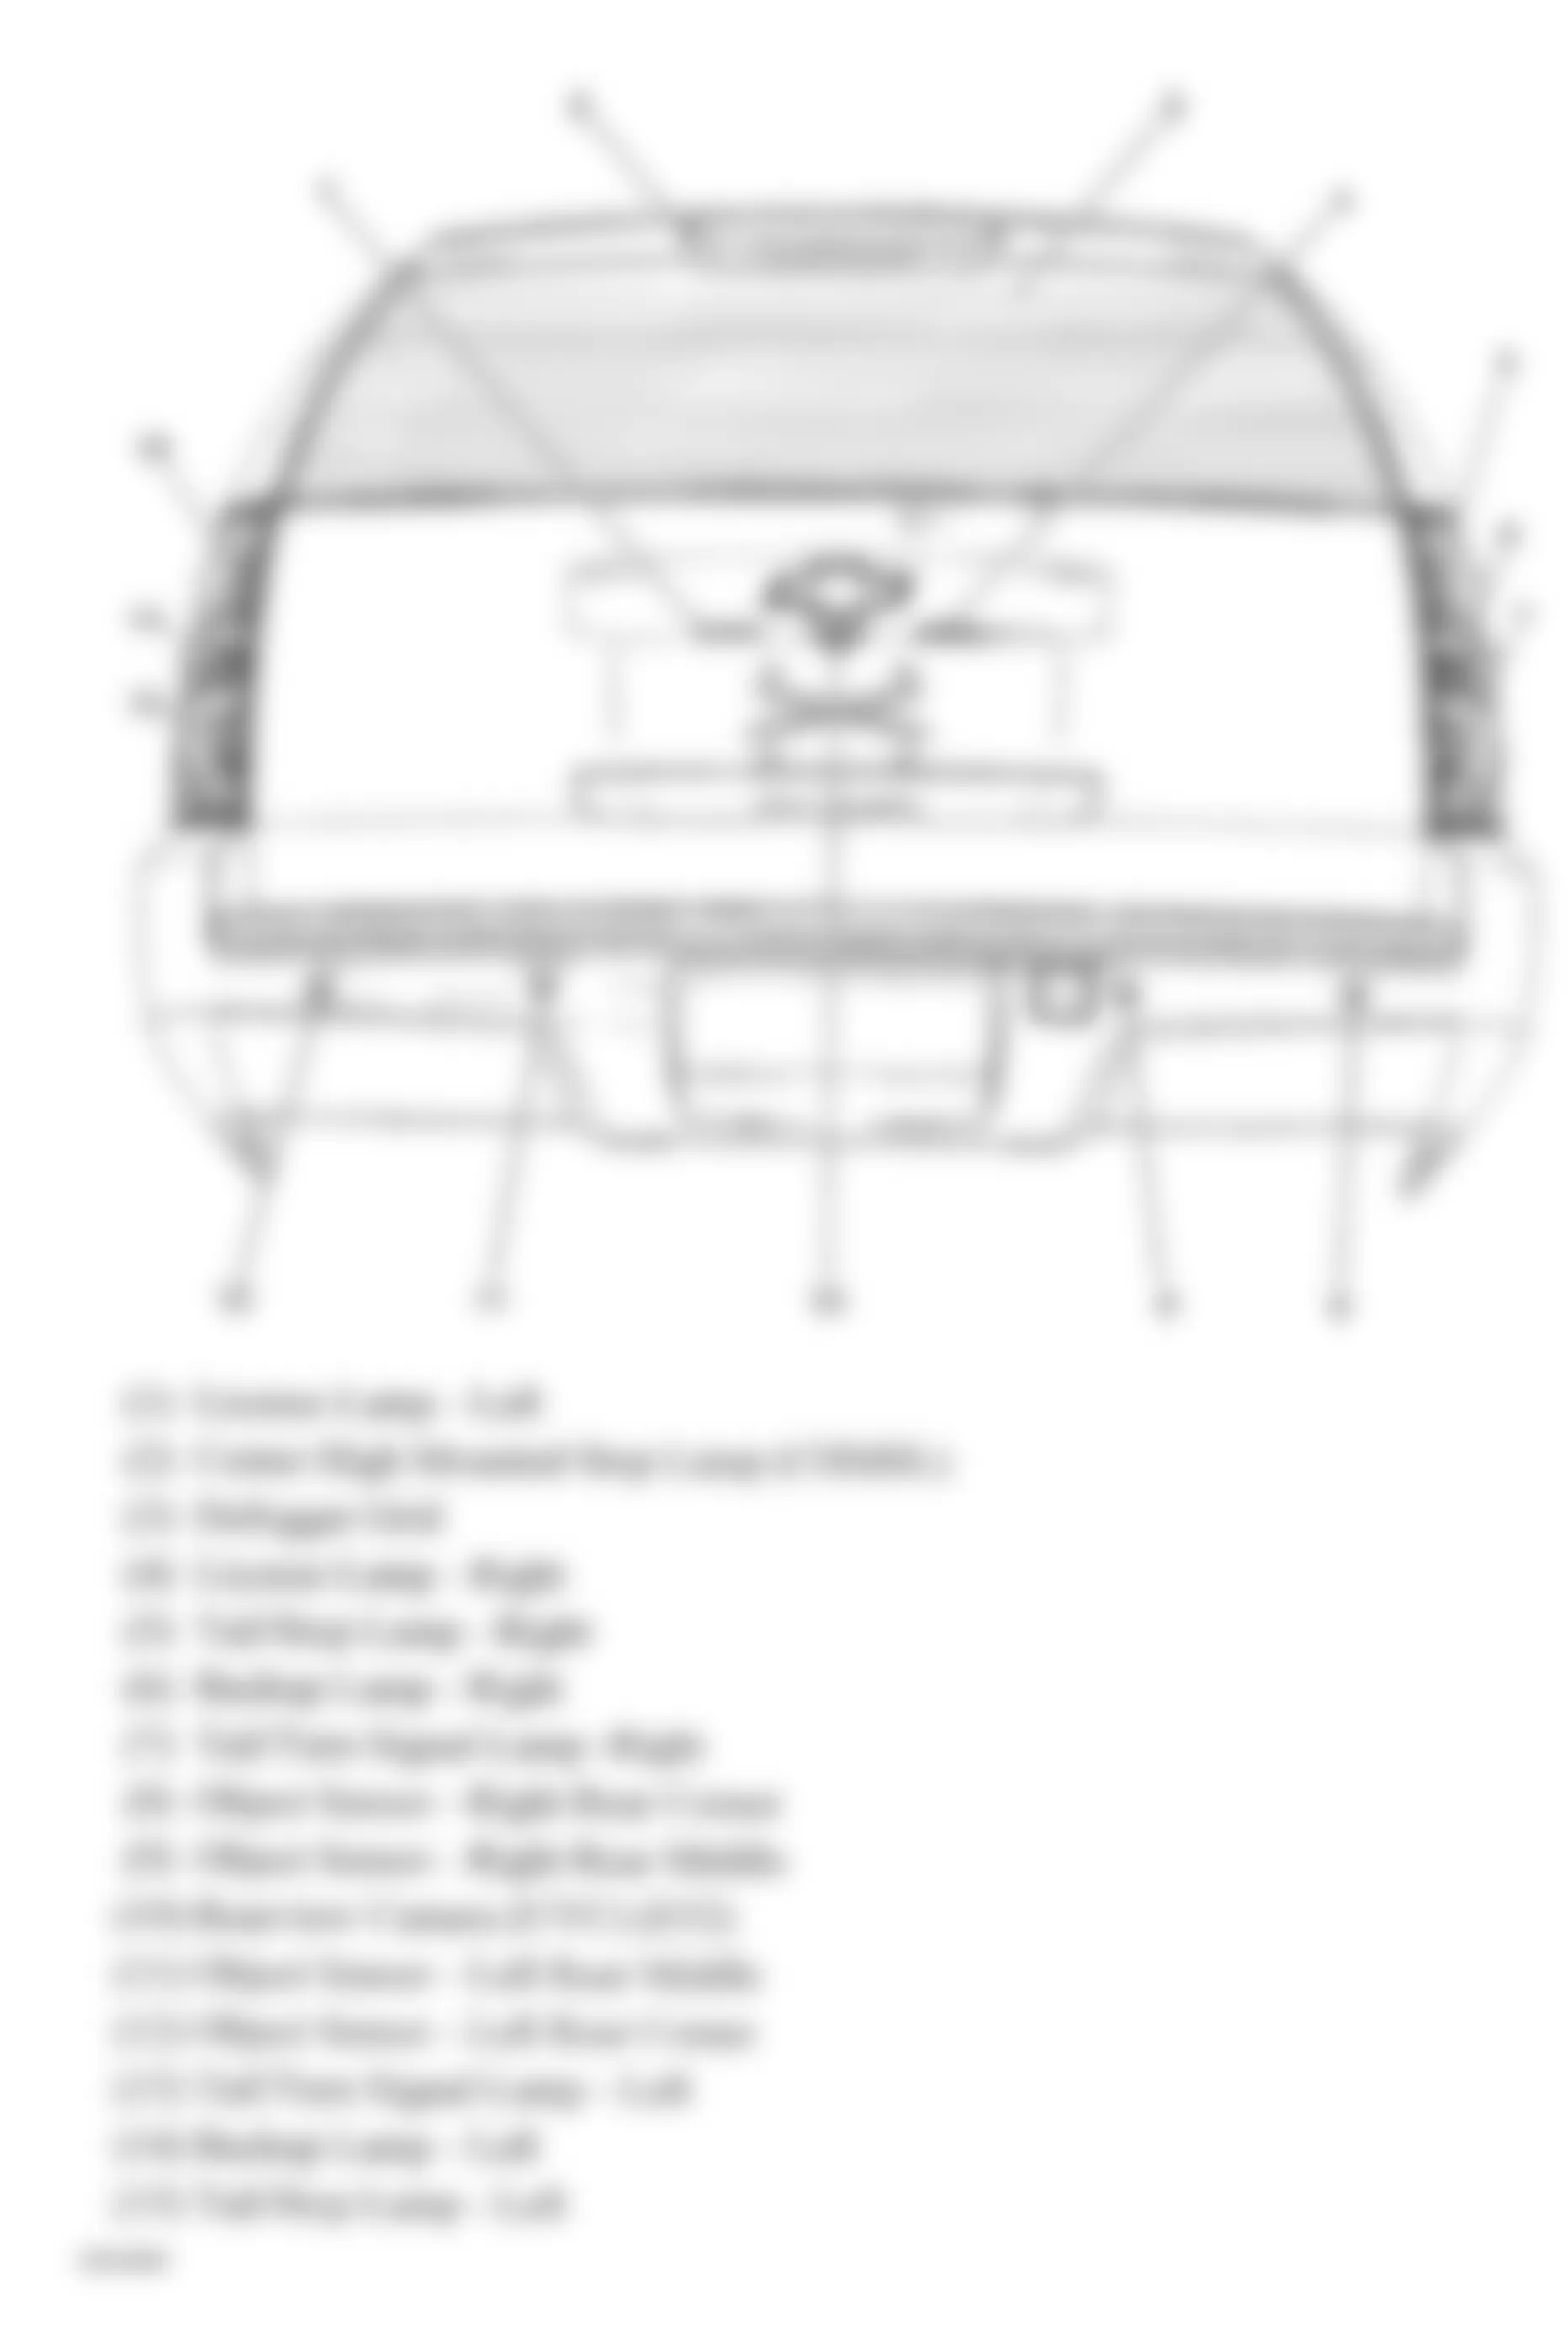 GMC Yukon Hybrid Denali 2010 - Component Locations -  Rear Of Vehicle (Avalanche, Suburban & Tahoe W/One Piece Liftgate)